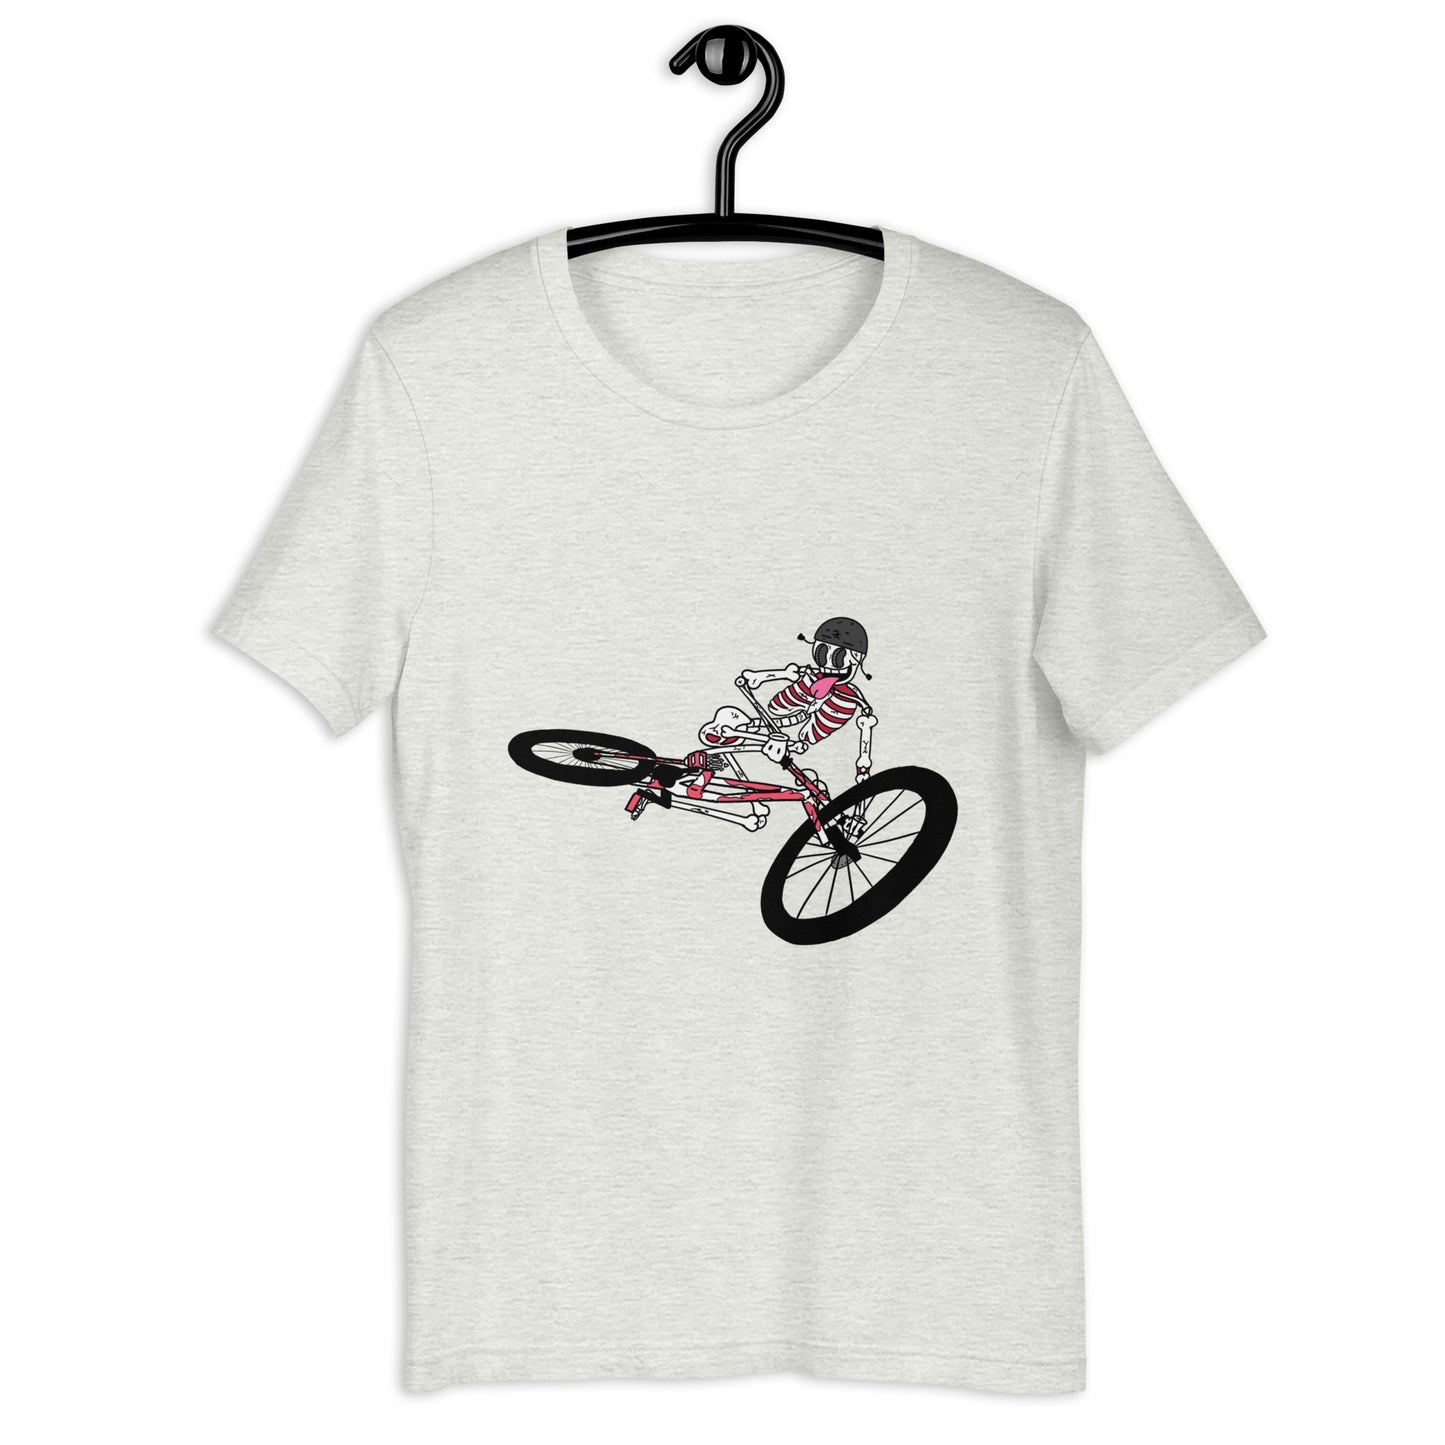 Skelton Rider - Unisex t-shirt